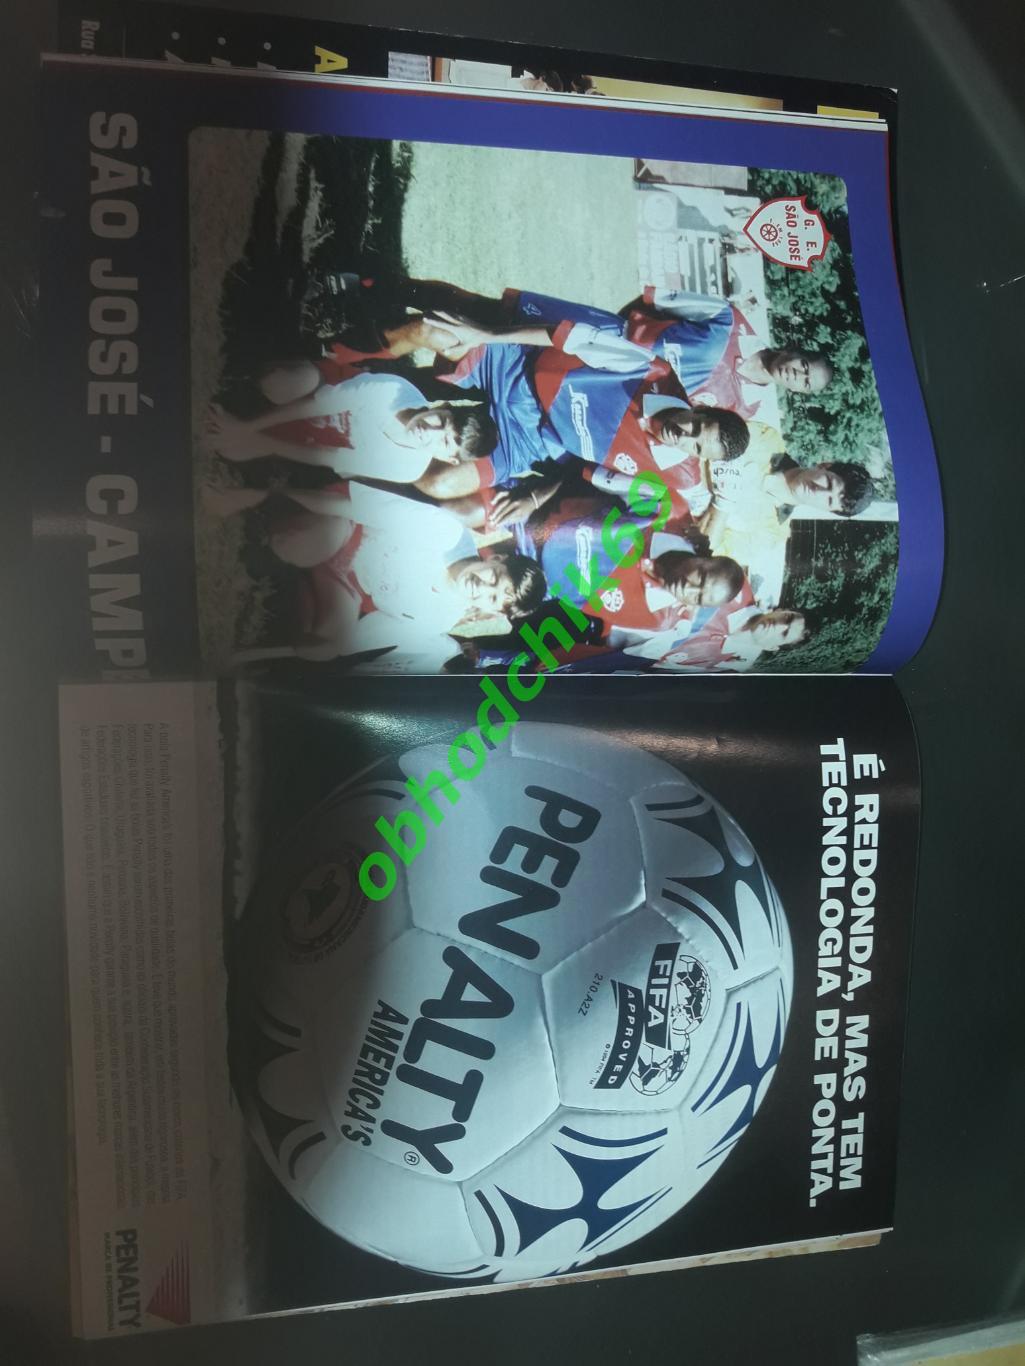 Журнал_федерации футбола Бразилия сезон 1997/98 Постеры Сан-Хосе/ Сан-Луис 4